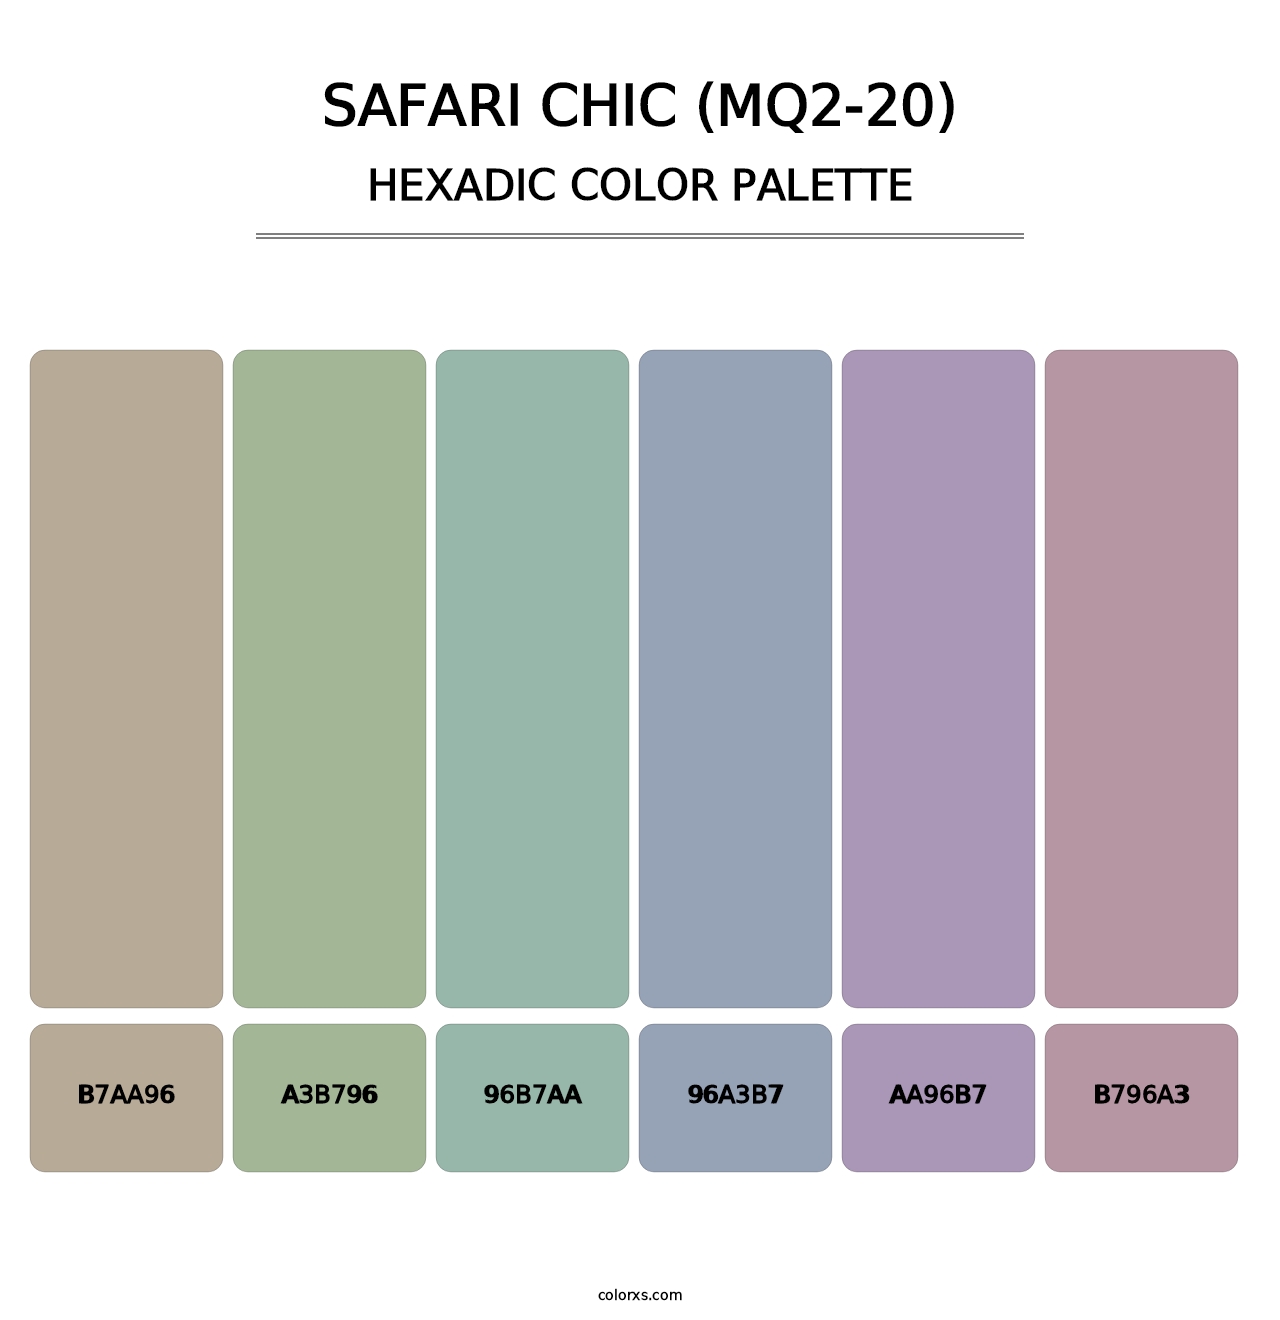 Safari Chic (MQ2-20) - Hexadic Color Palette